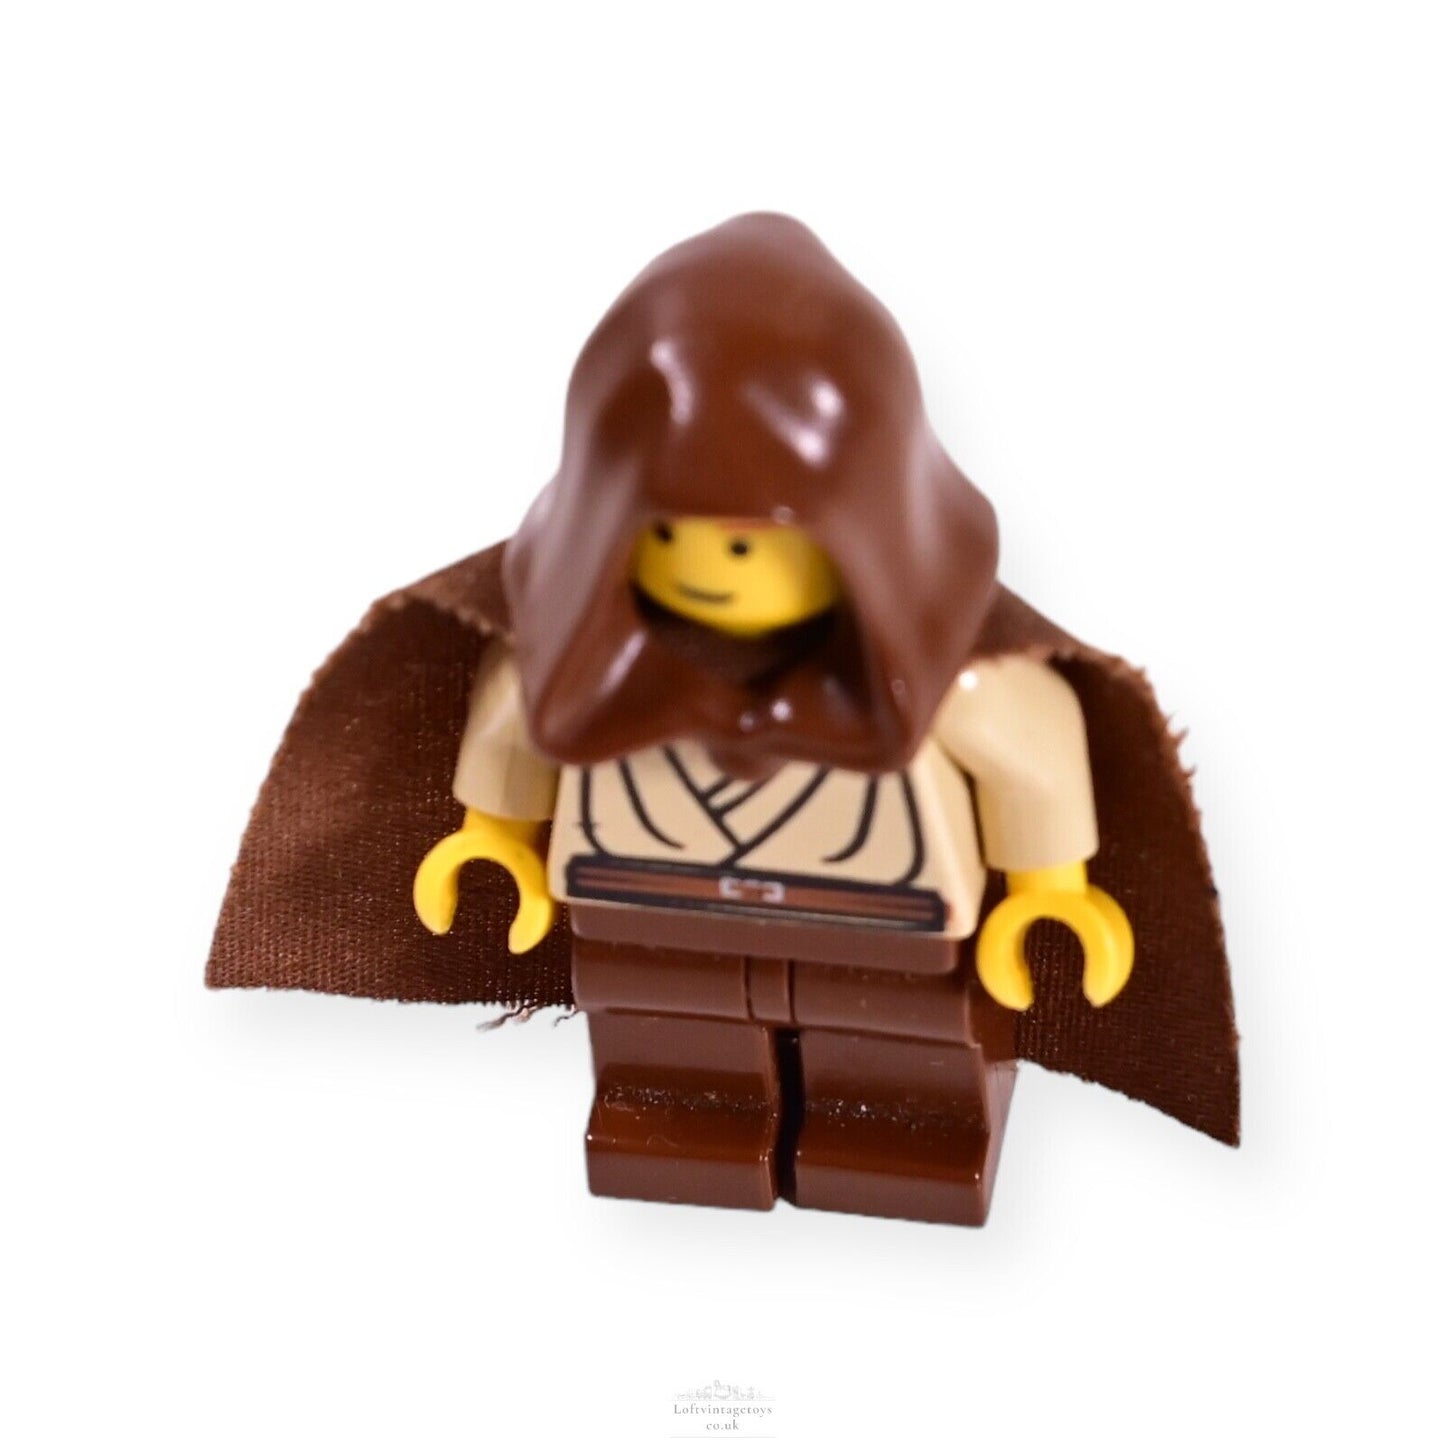 Lego Star Wars Obi-Wan Kenobi Minifigure sw0024 from set 7161